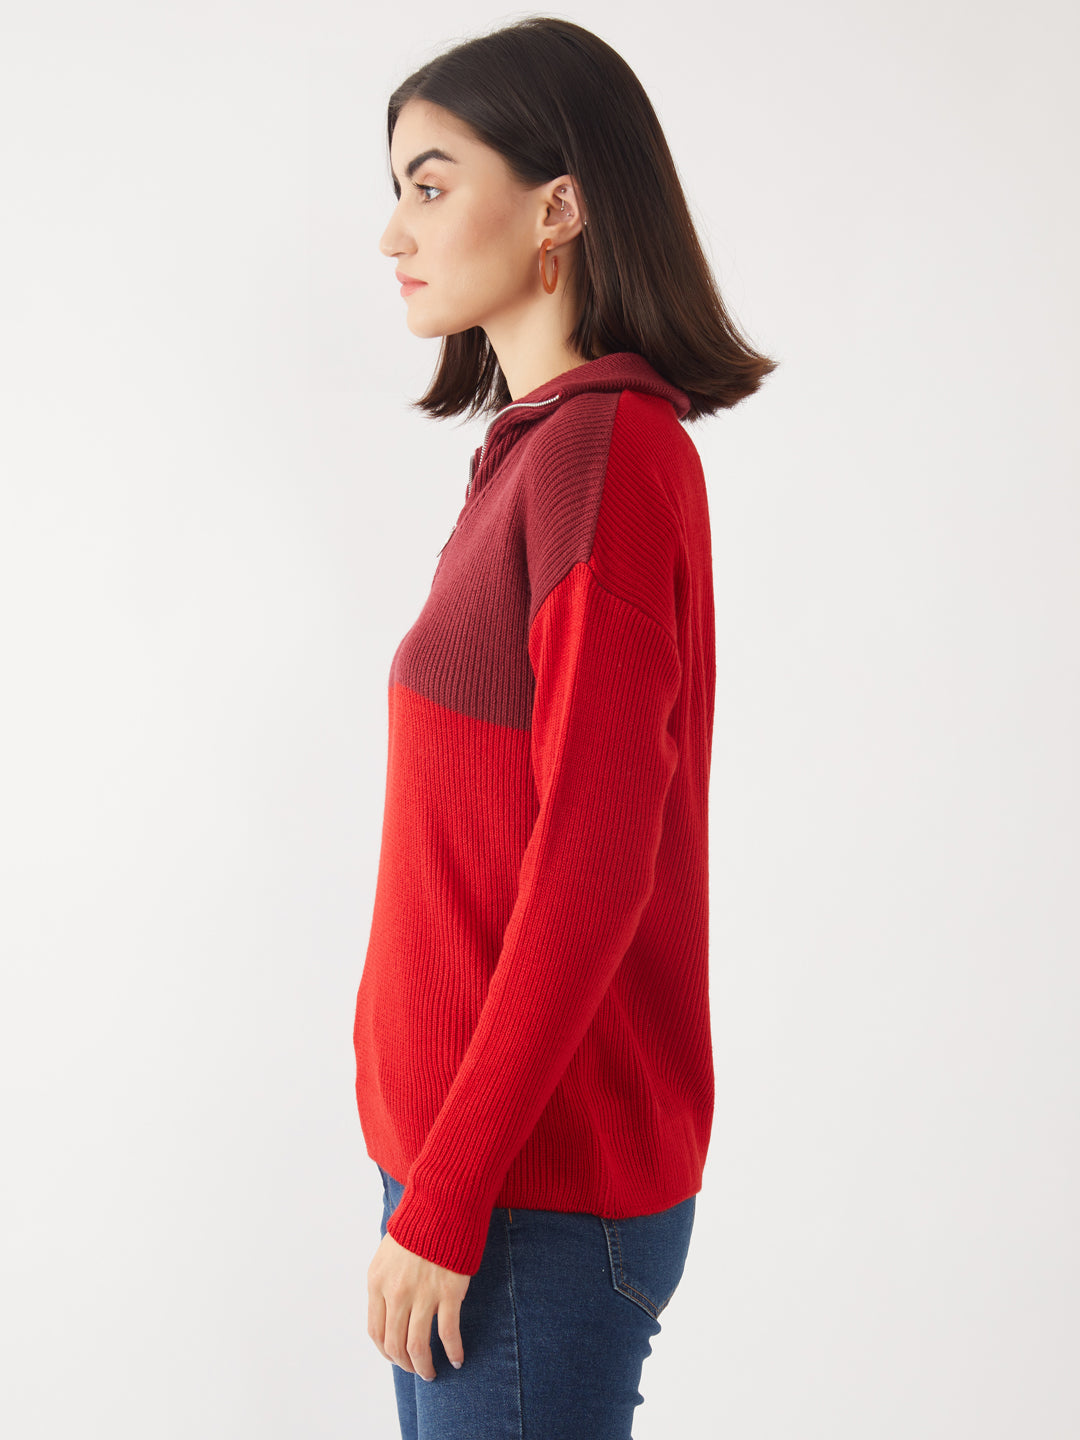 Maroon Colourblocked Sweater For Women